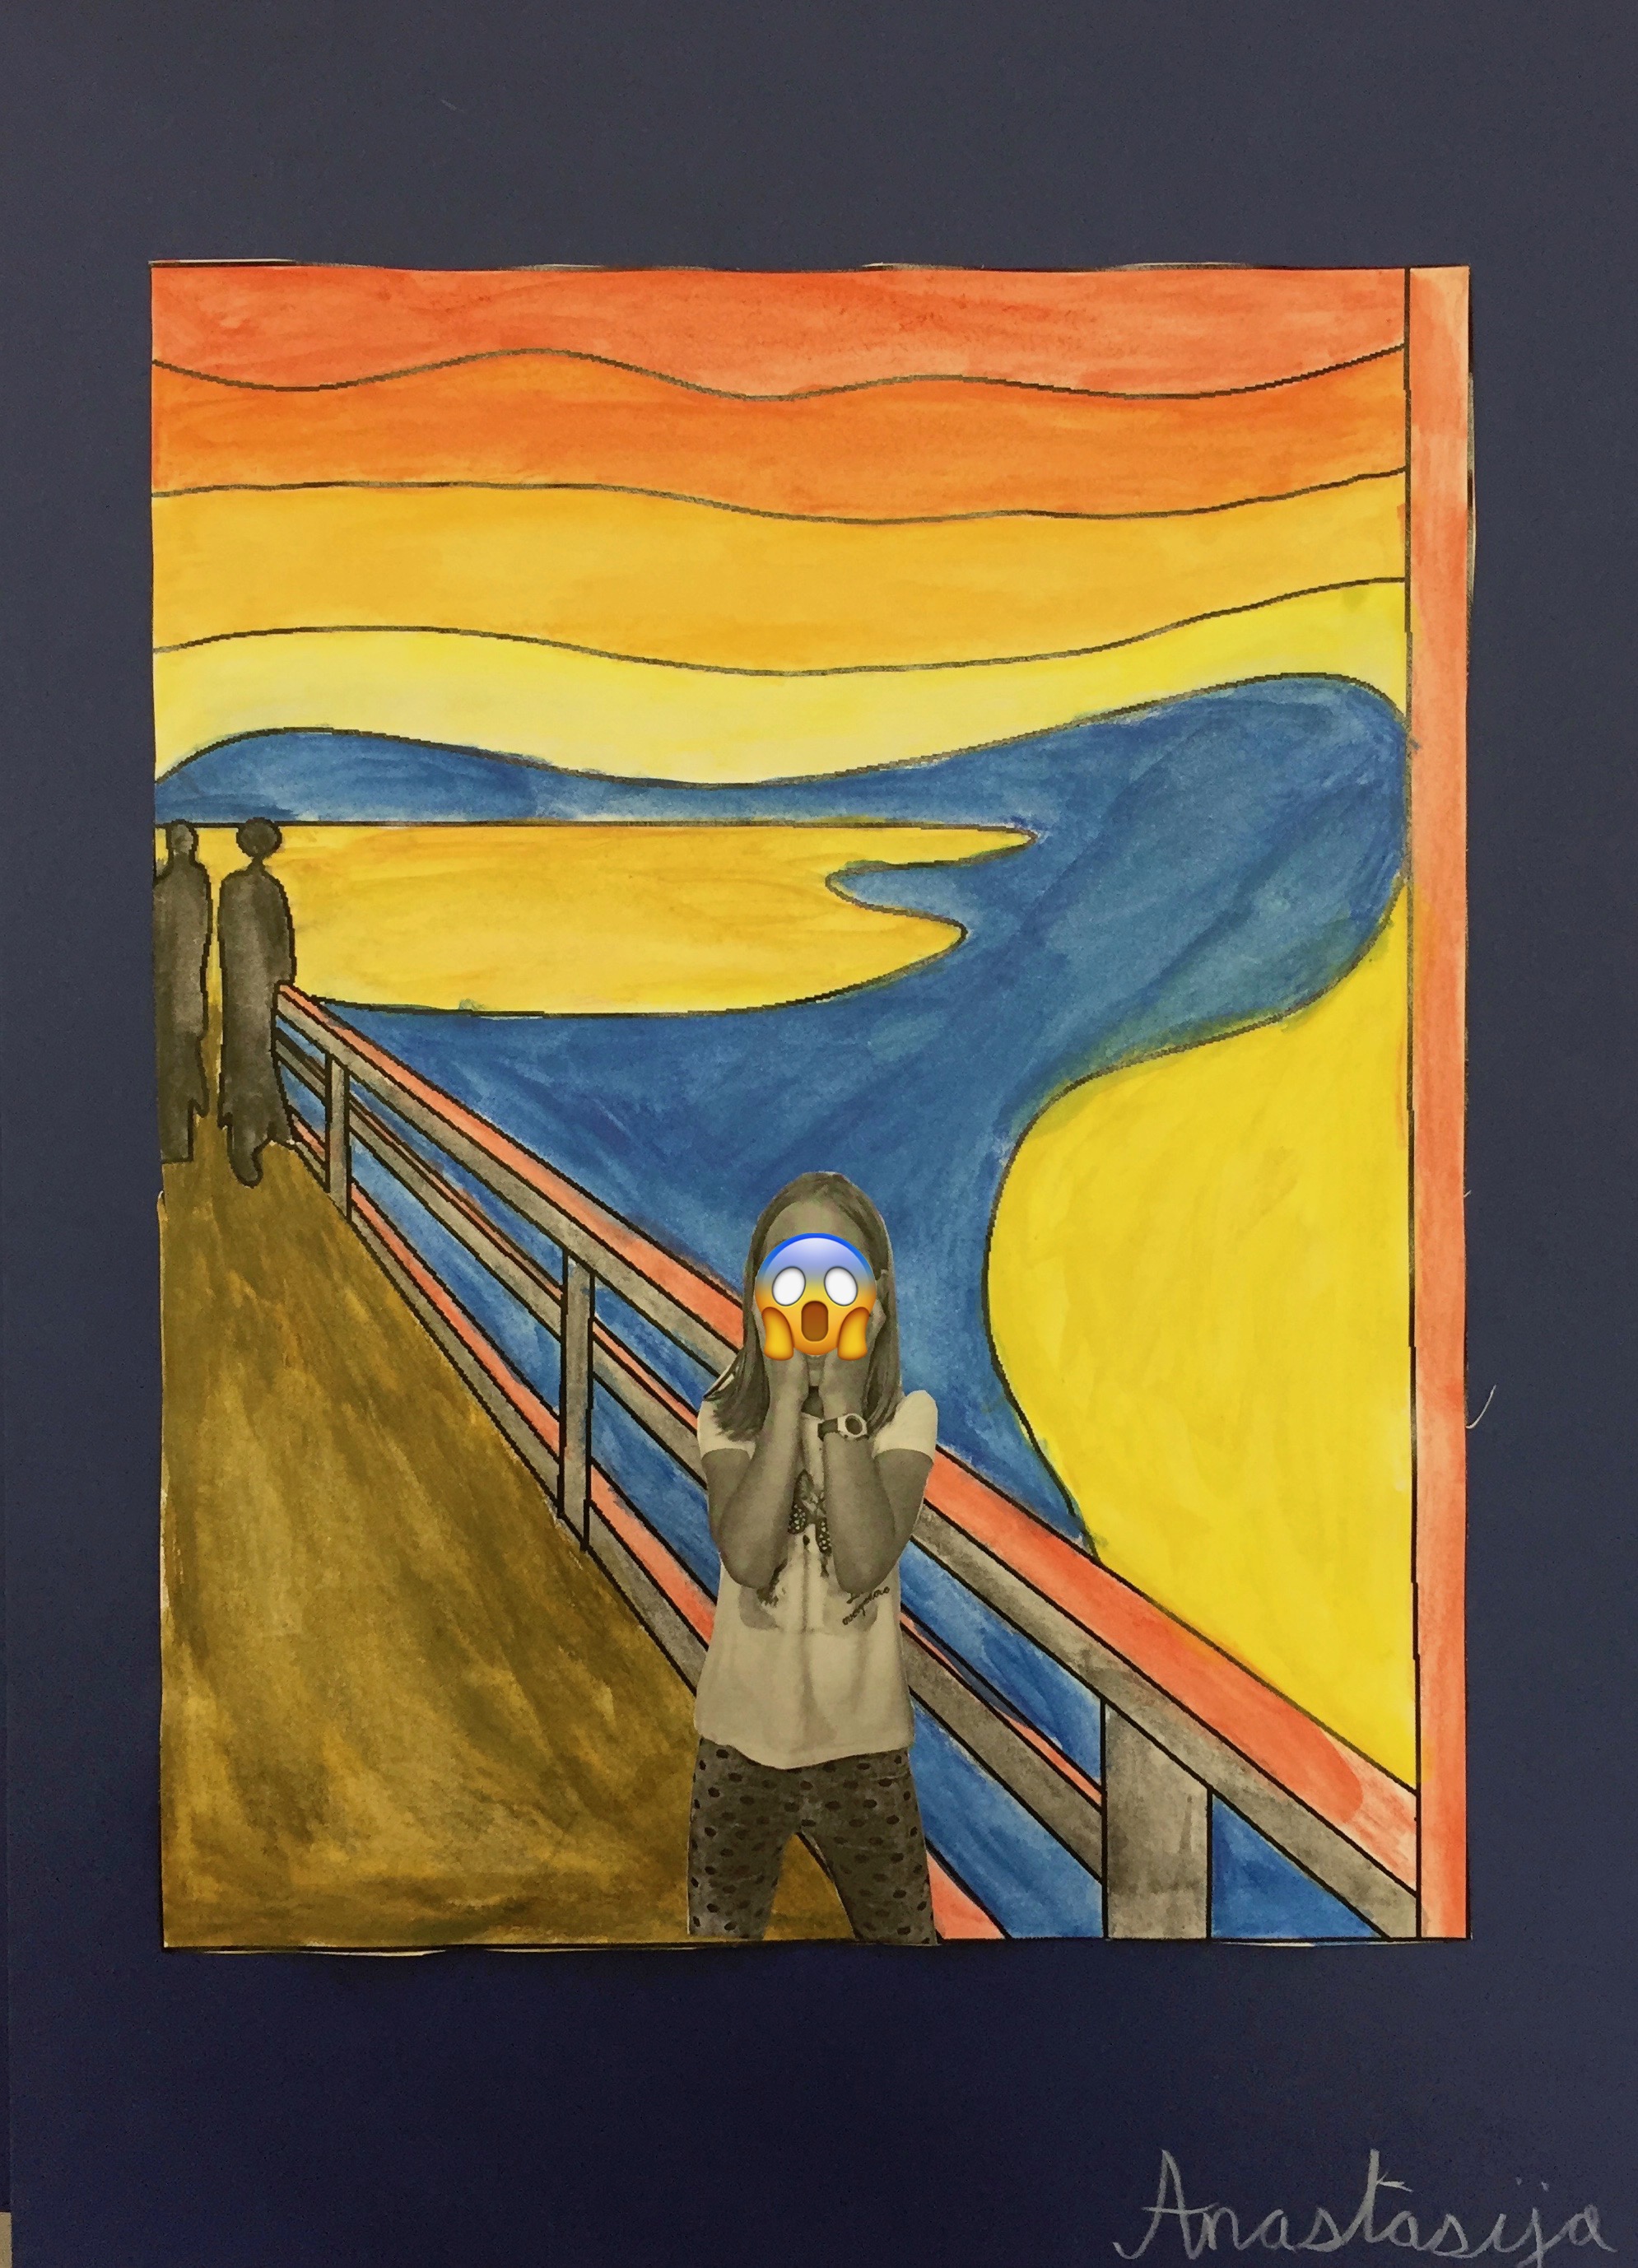 Le Cri d'Edvard Munch - Je dessine avec ma classe